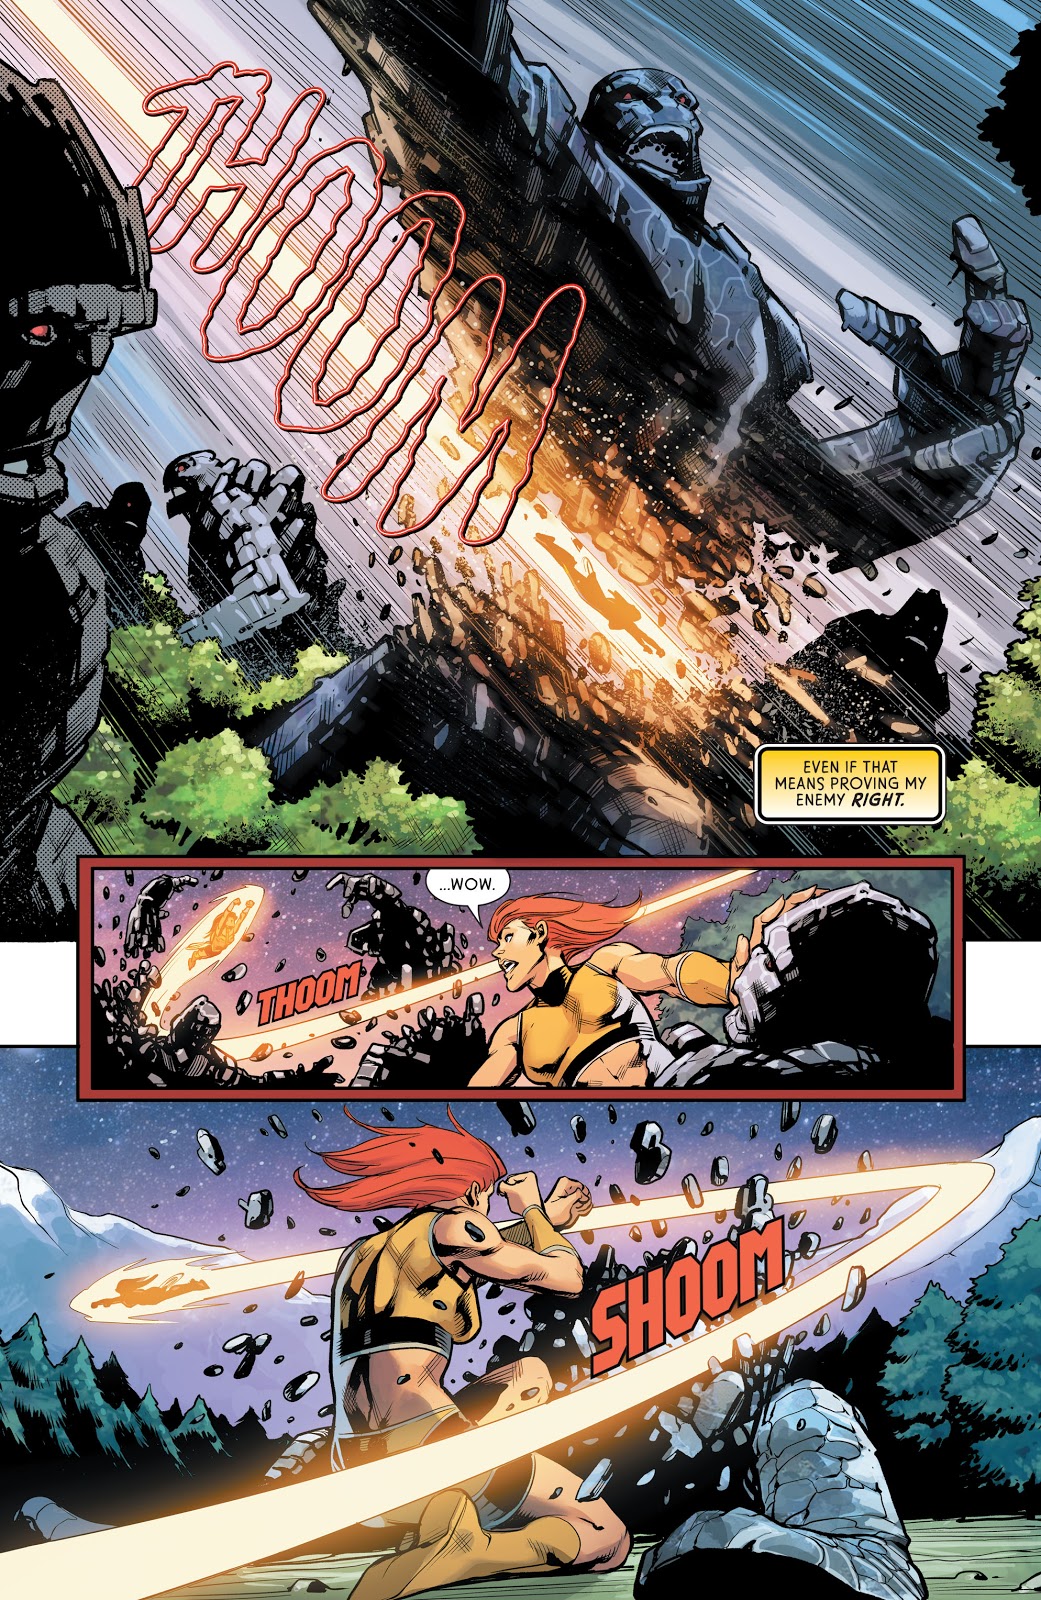 Wonder Woman Takes On a Dozen Titans